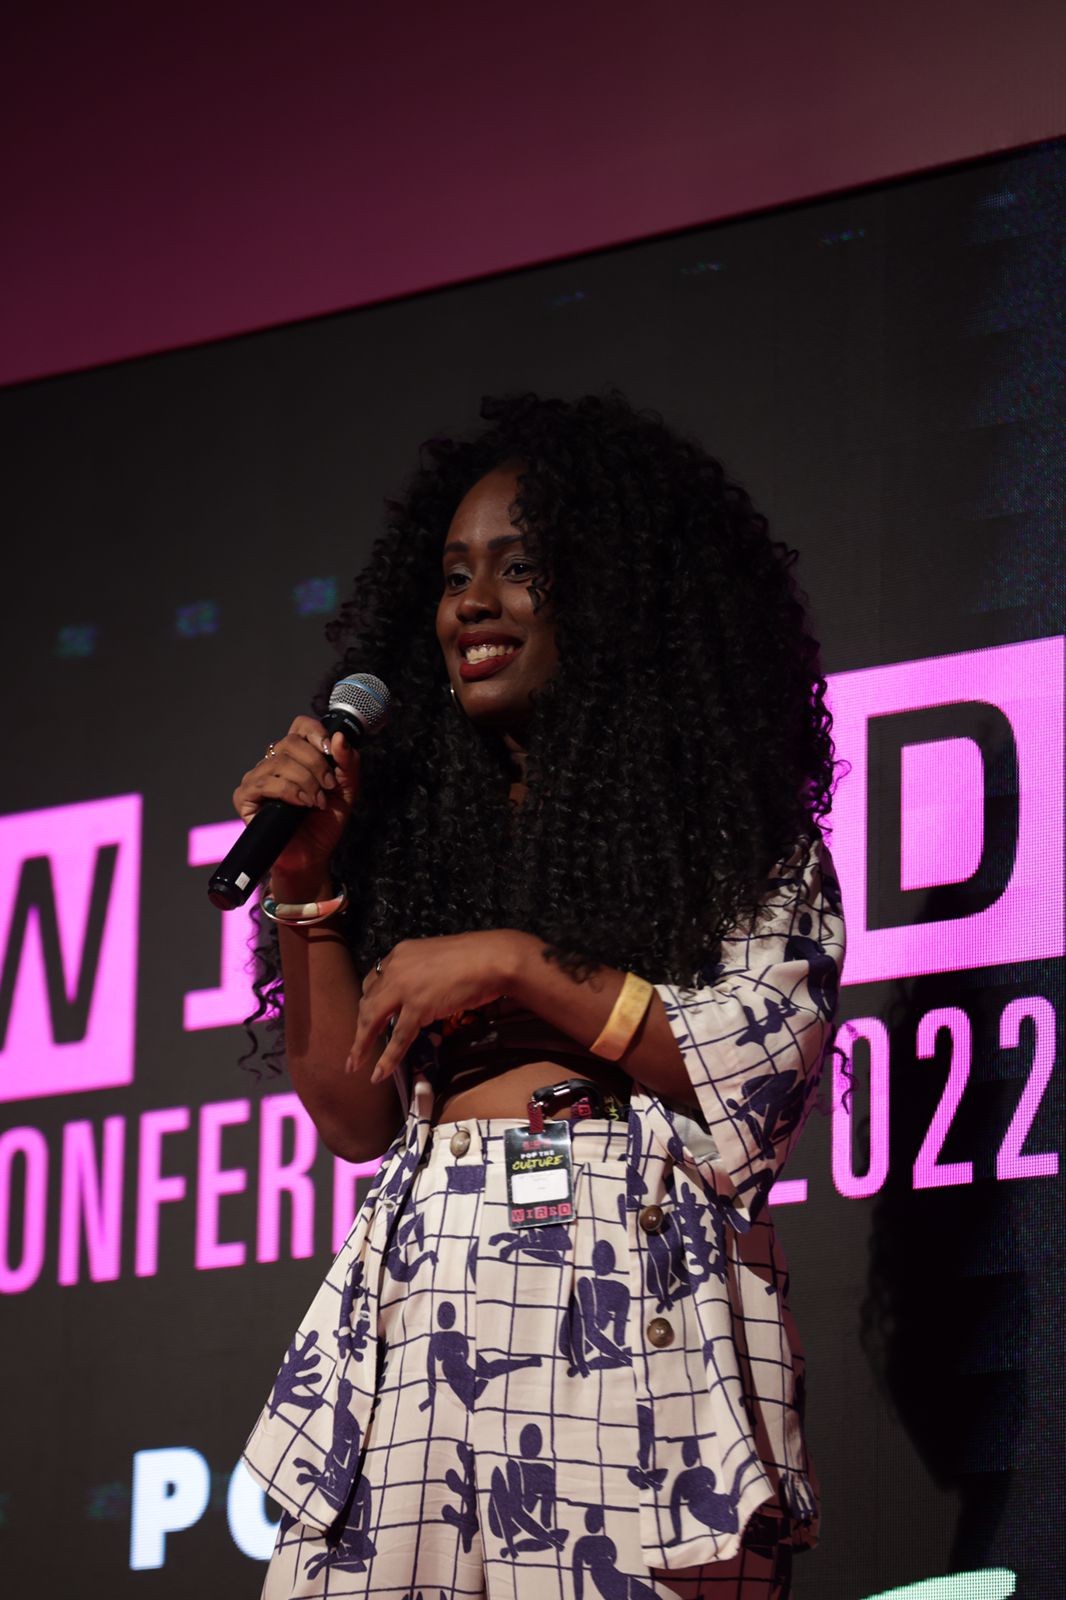 Kemla apresentou o Wired Conference 2022 (Foto: André Ligeiro)